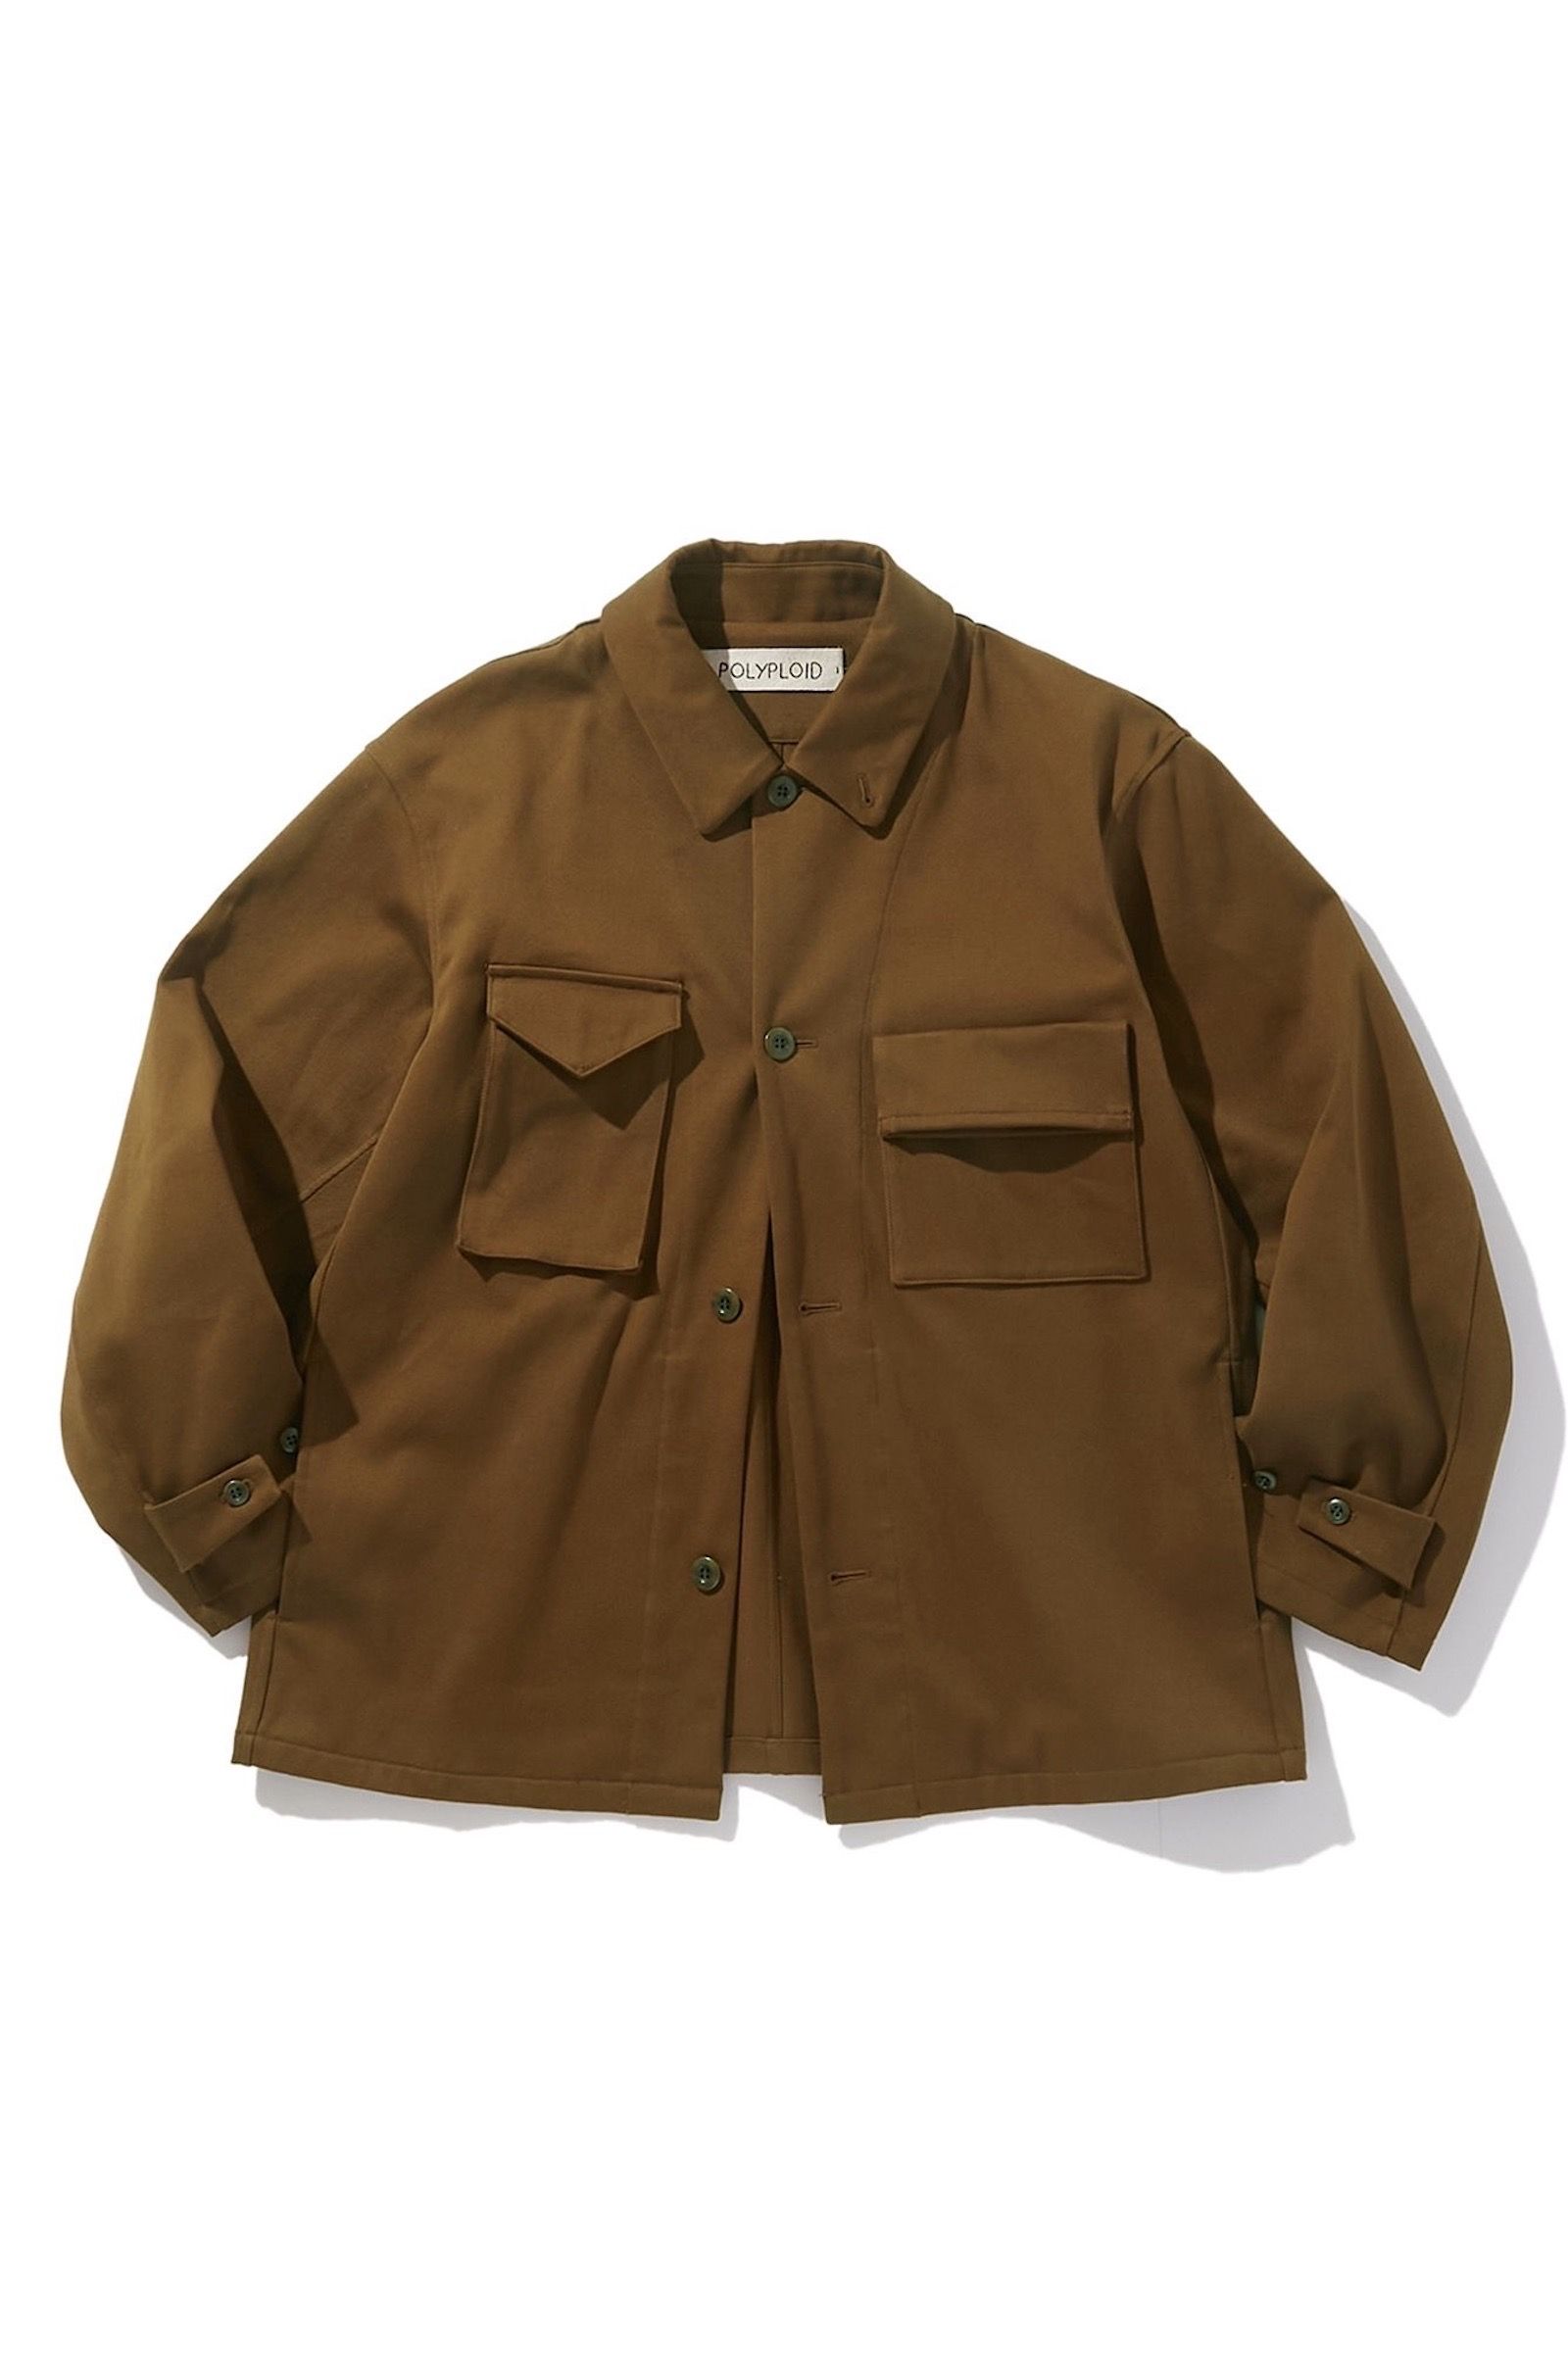 POLYPLOID - workwear jacket 21aw | asterisk